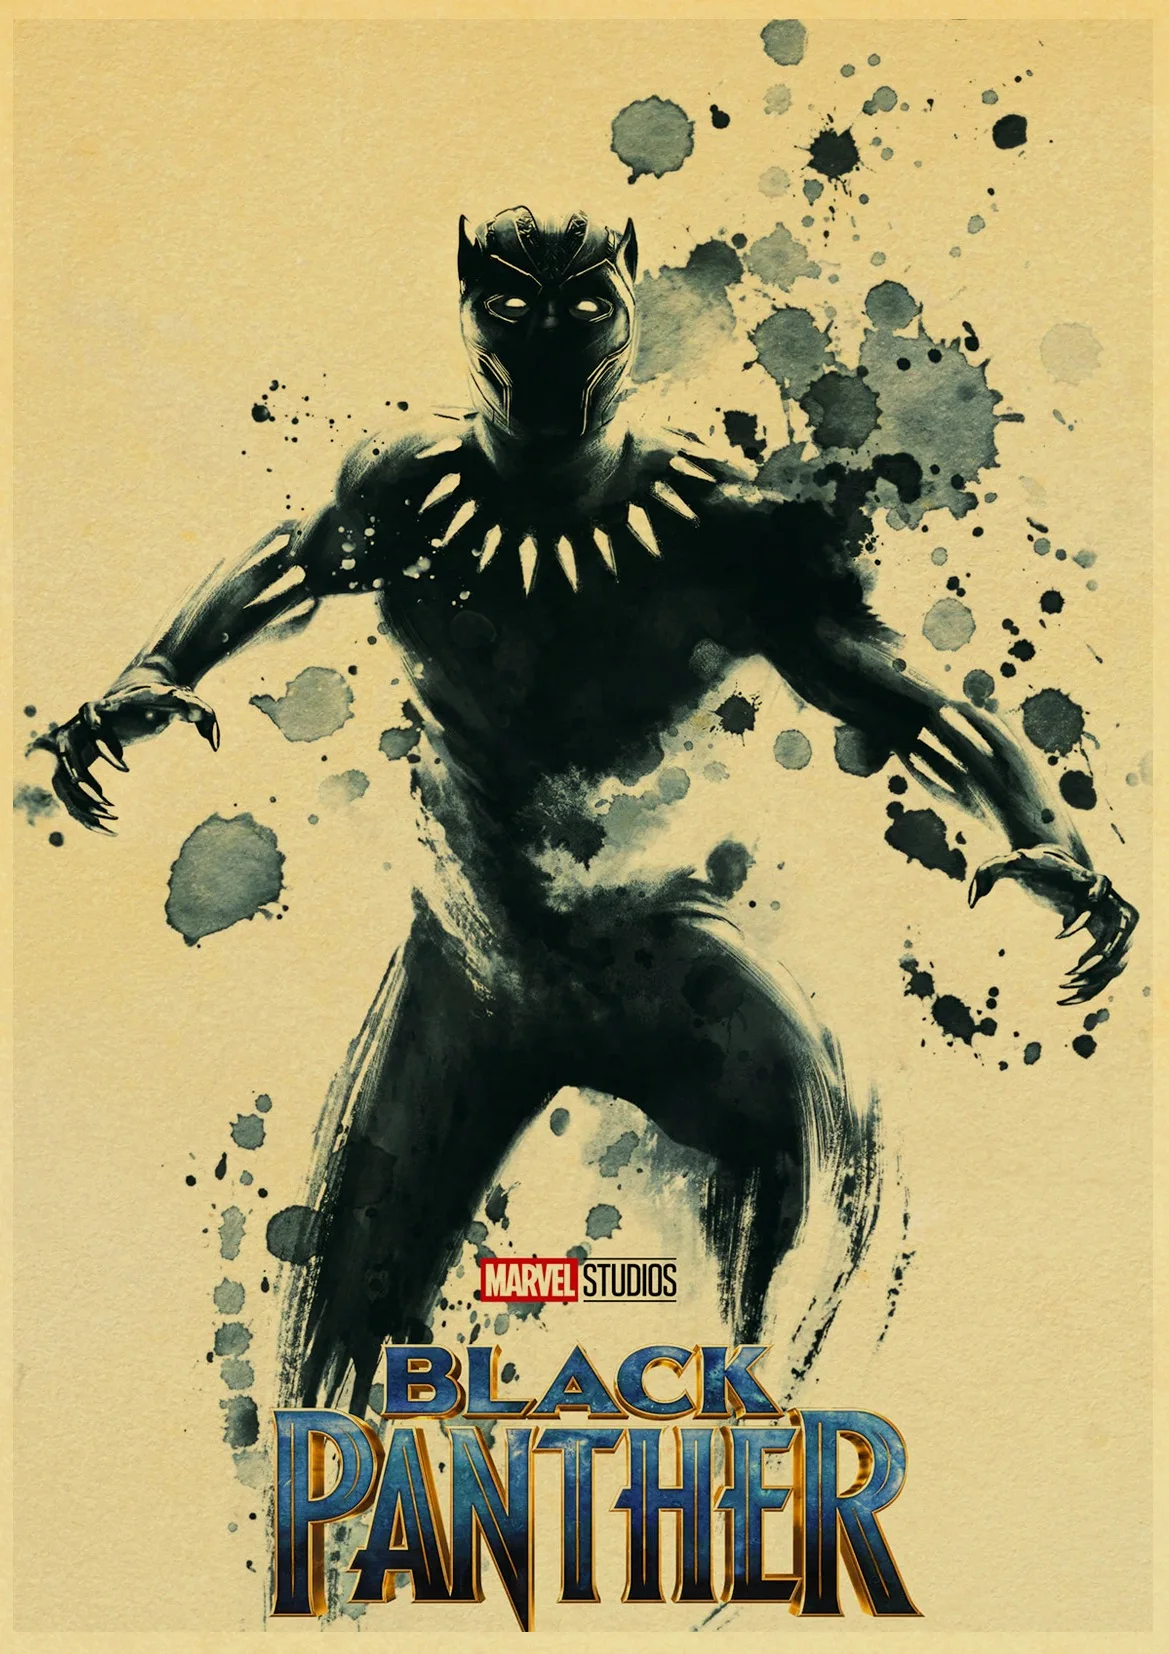 Фильм Marvel Черная пантера плакат Chadwick Boseman художественный плакат настенная покраска для комнаты прозрачная картина украшение - Цвет: D124